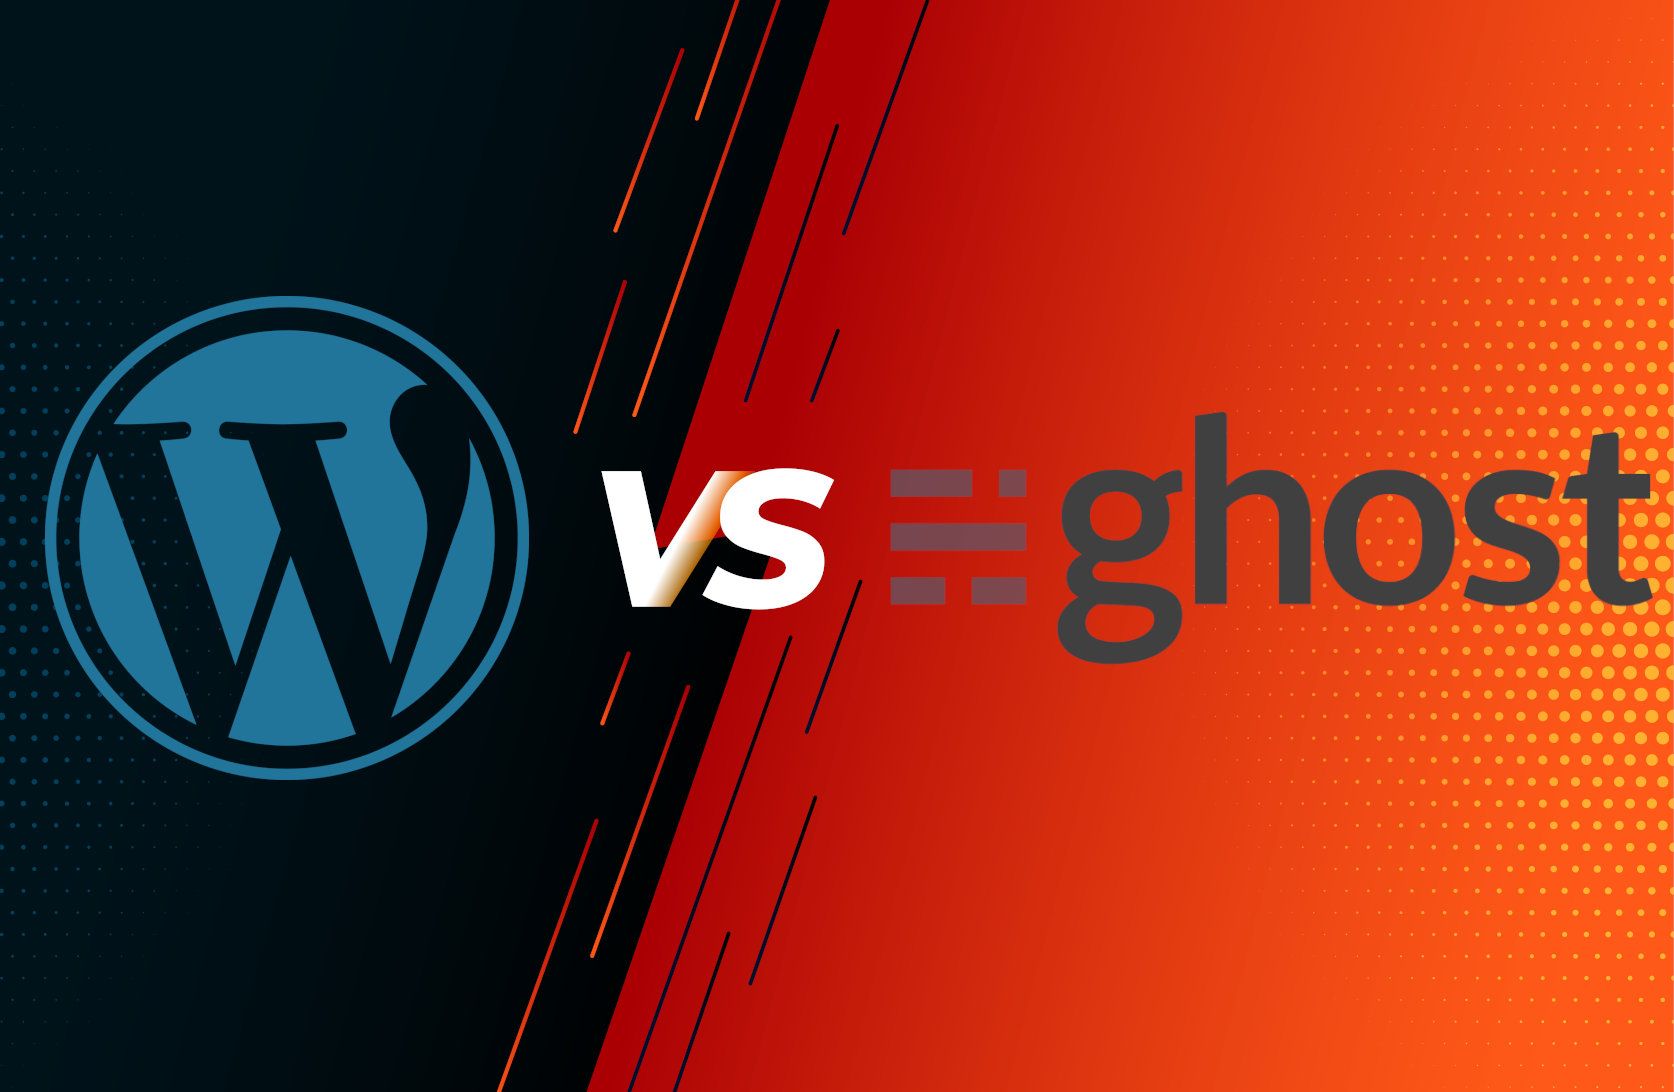 WordPress VS Ghost